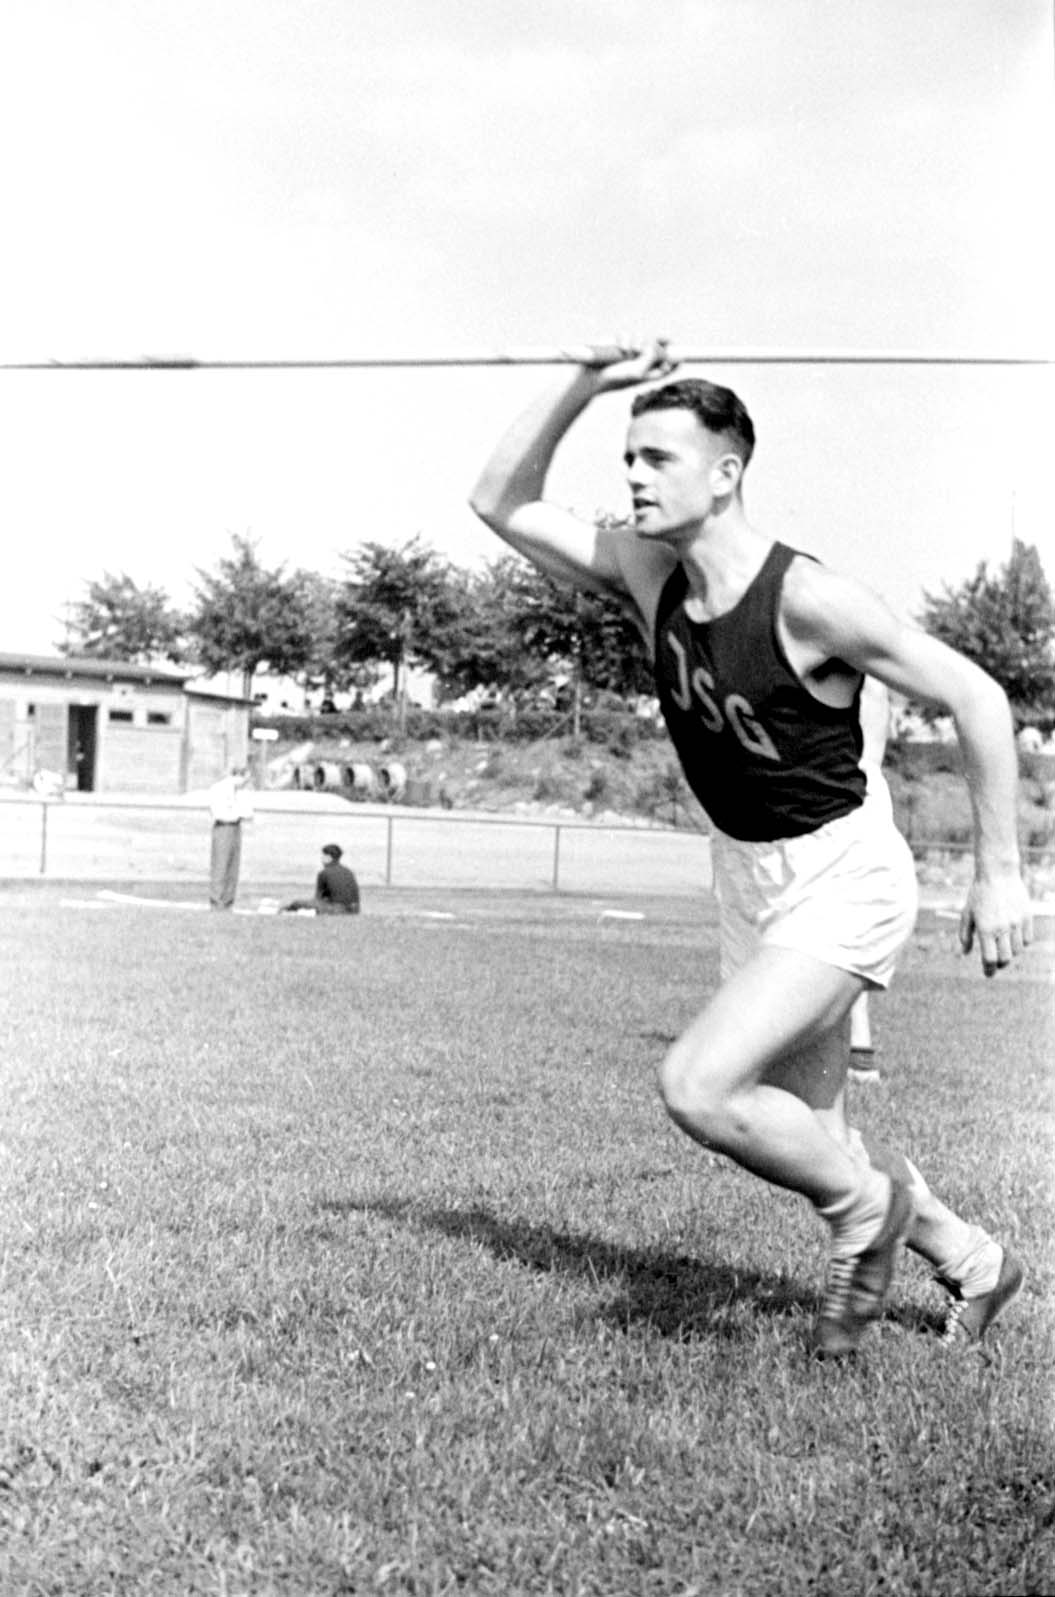 Berlin, Germany, 04/07/1937, Klaus Pfoertner, winner of the javelin competiton at a Jewish sports tournament